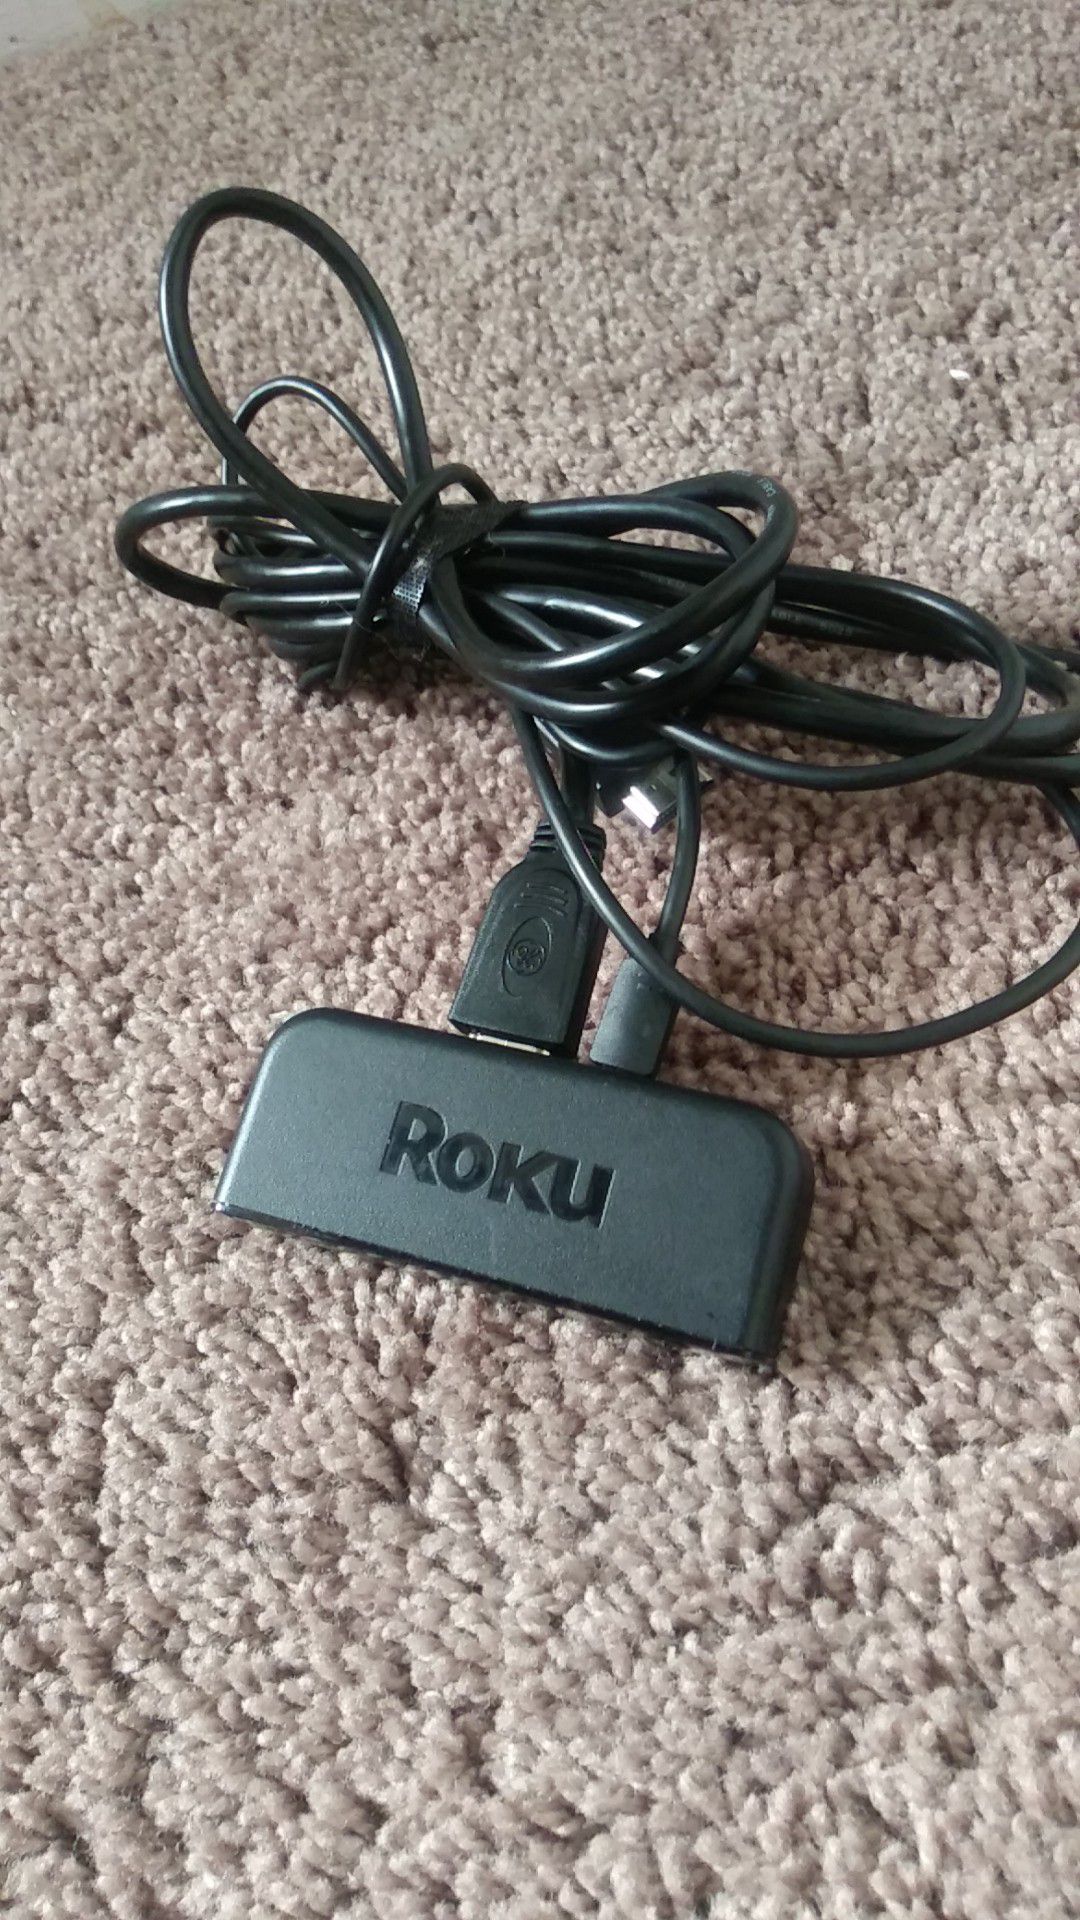 Roku Stick Unlocked